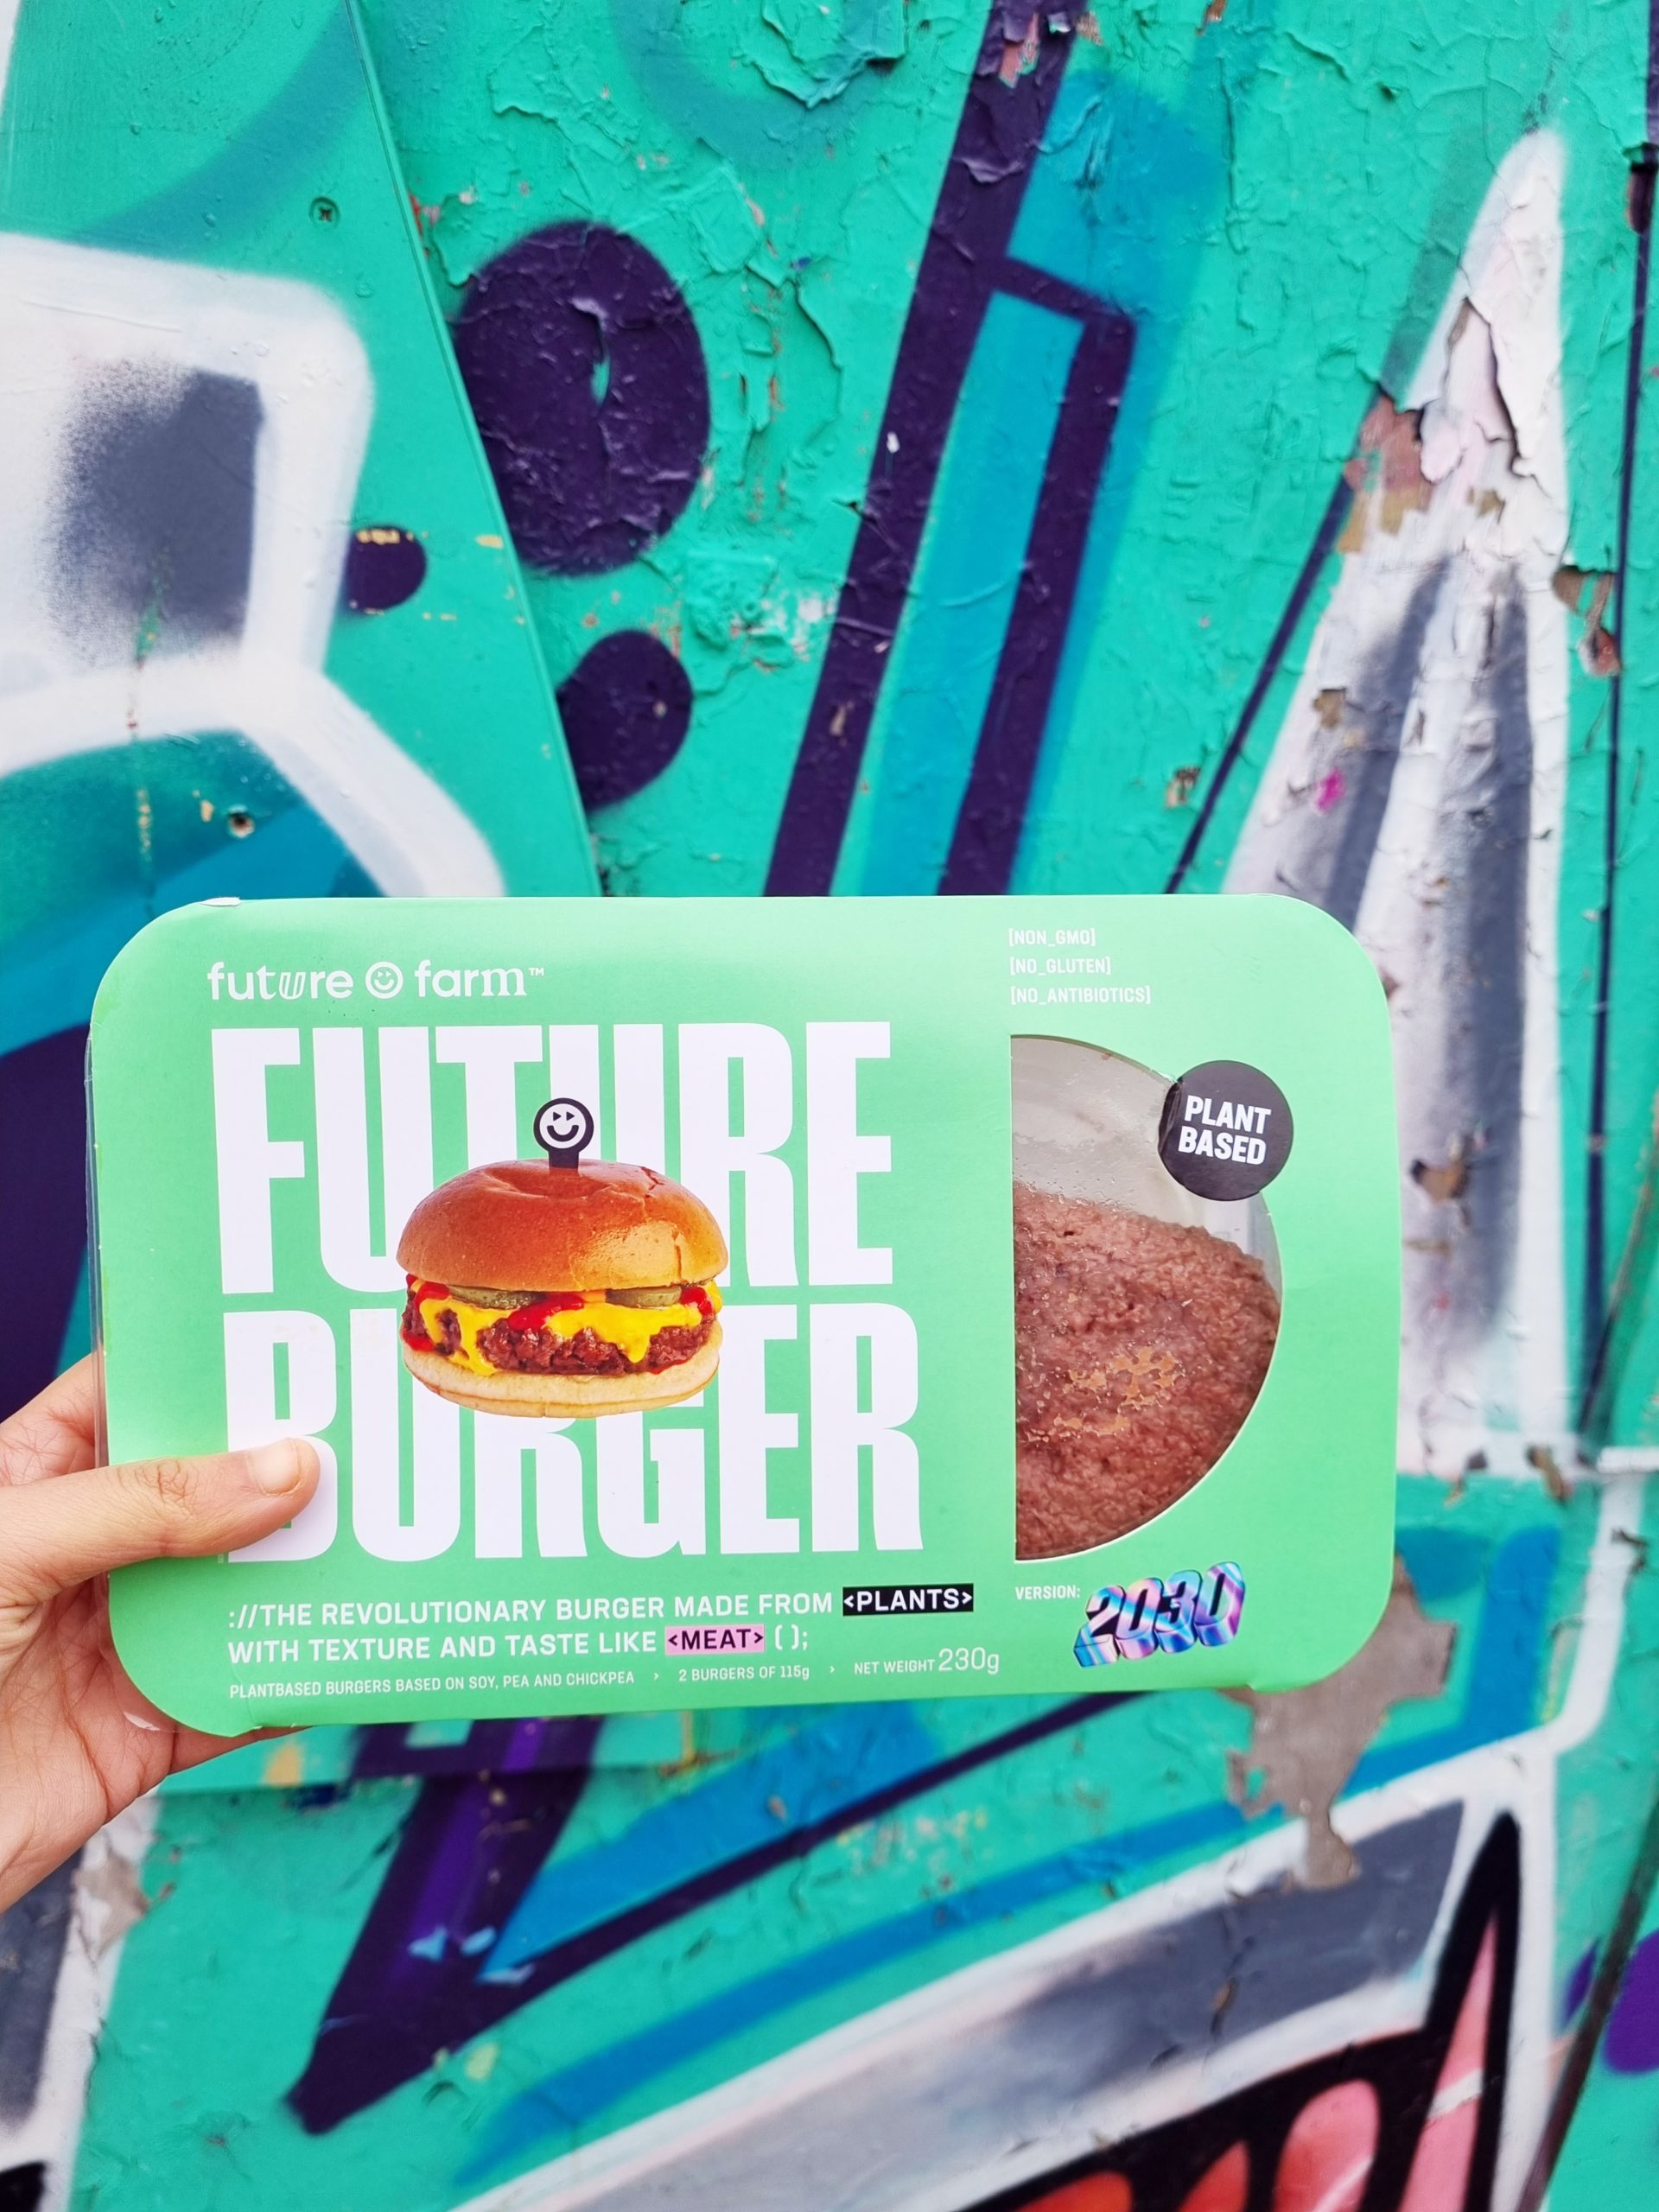 <img src="future.jpg" alt="future farm vegan burger pack"/> 